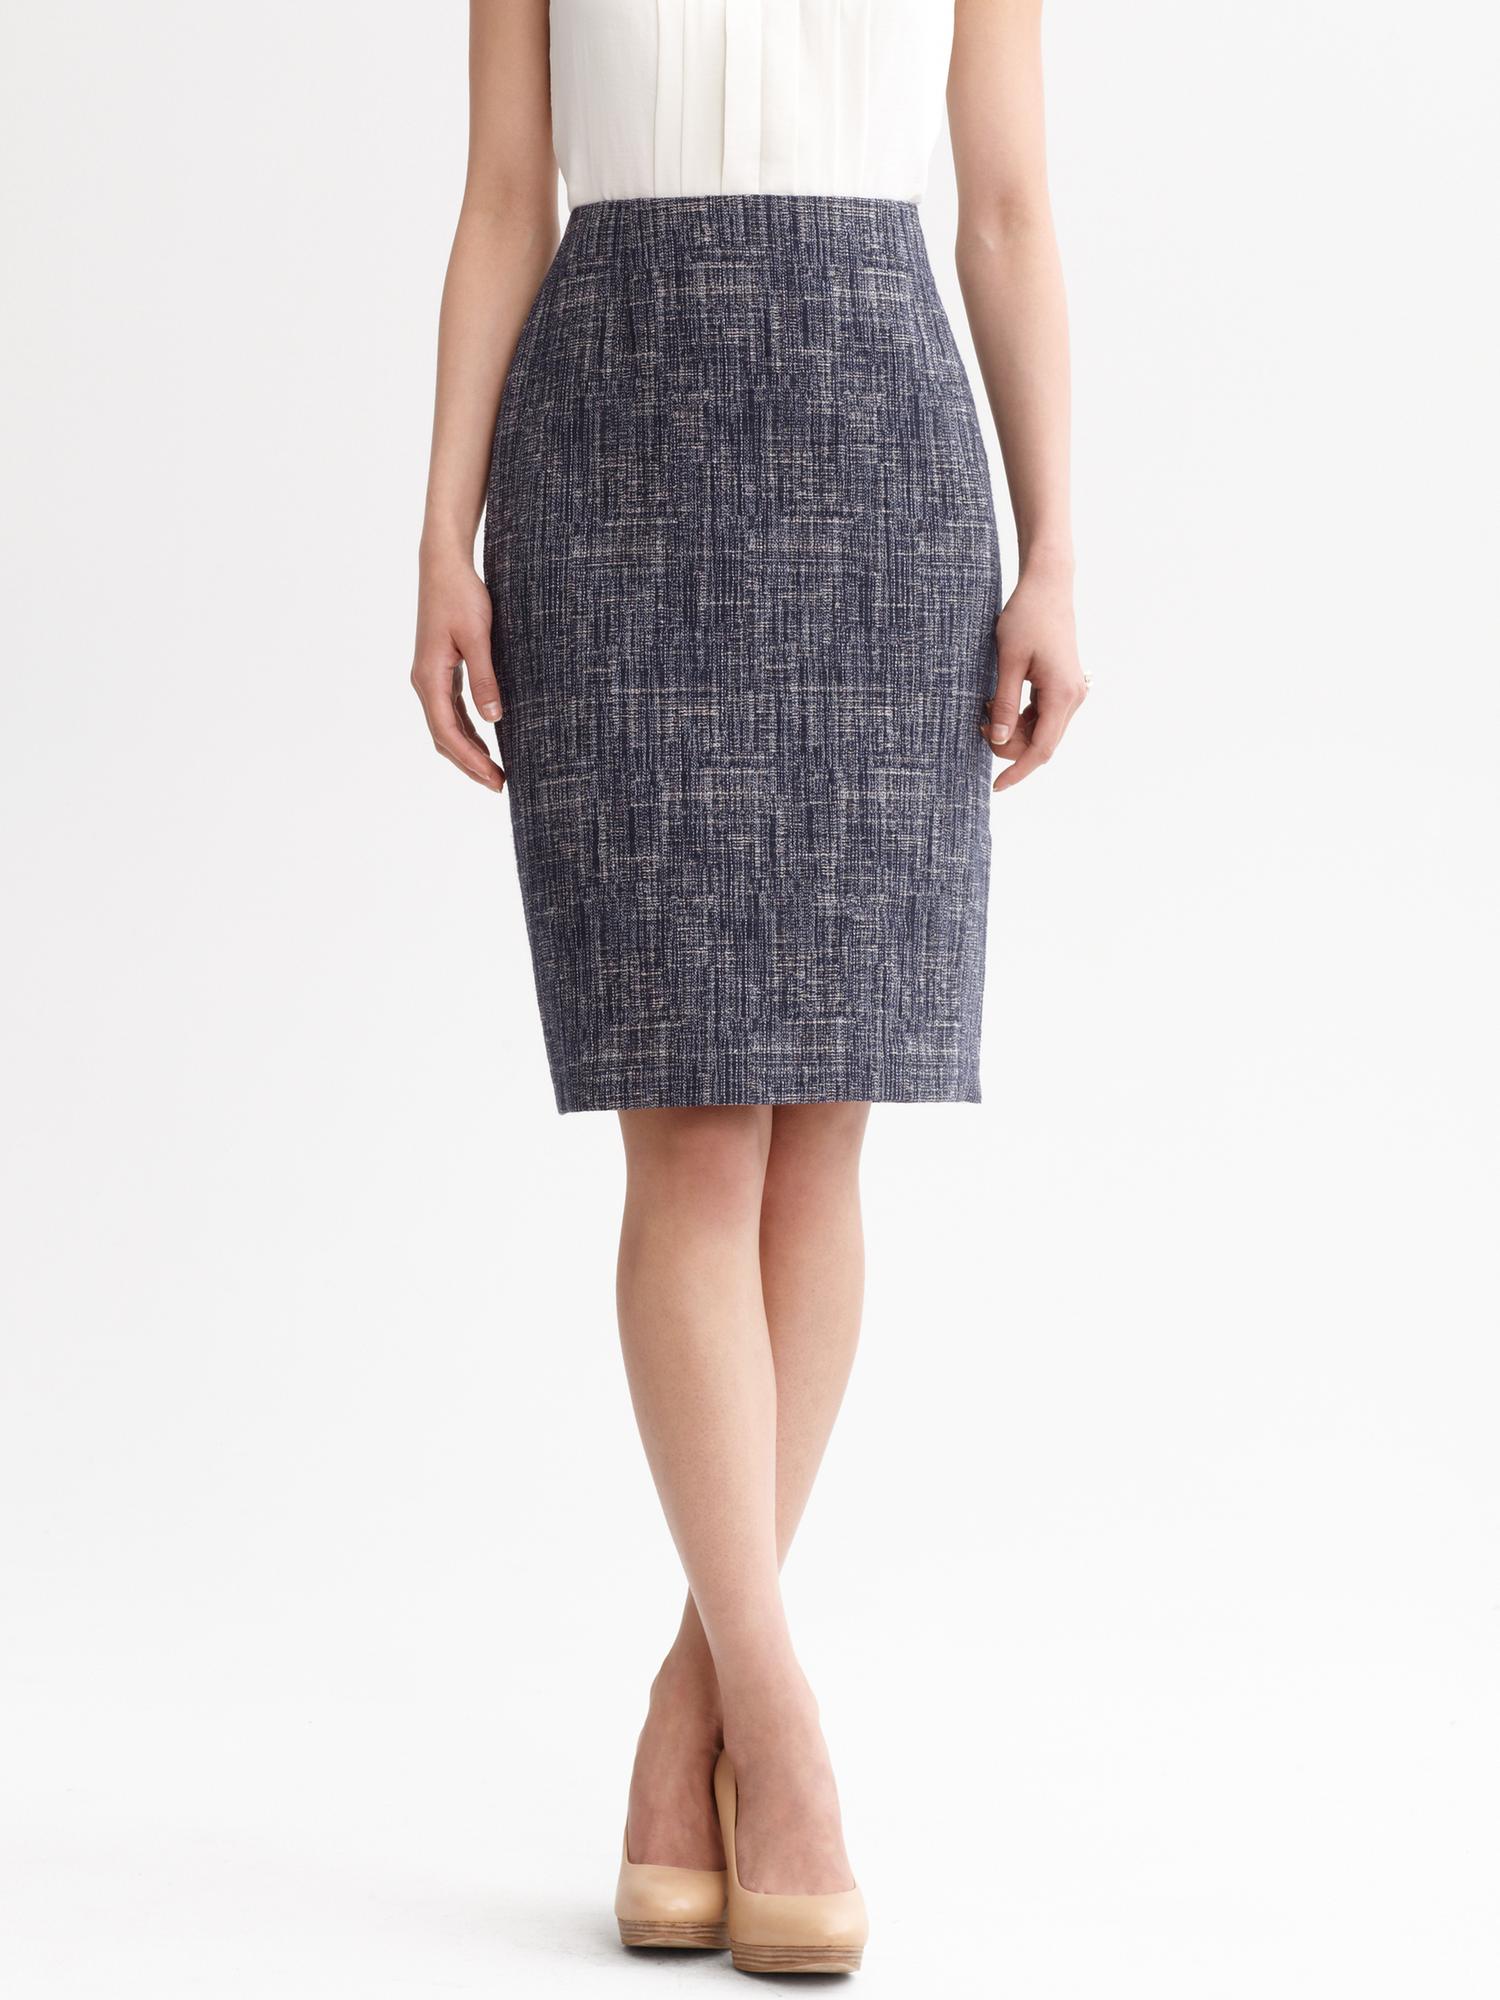 Textured indigo pencil skirt